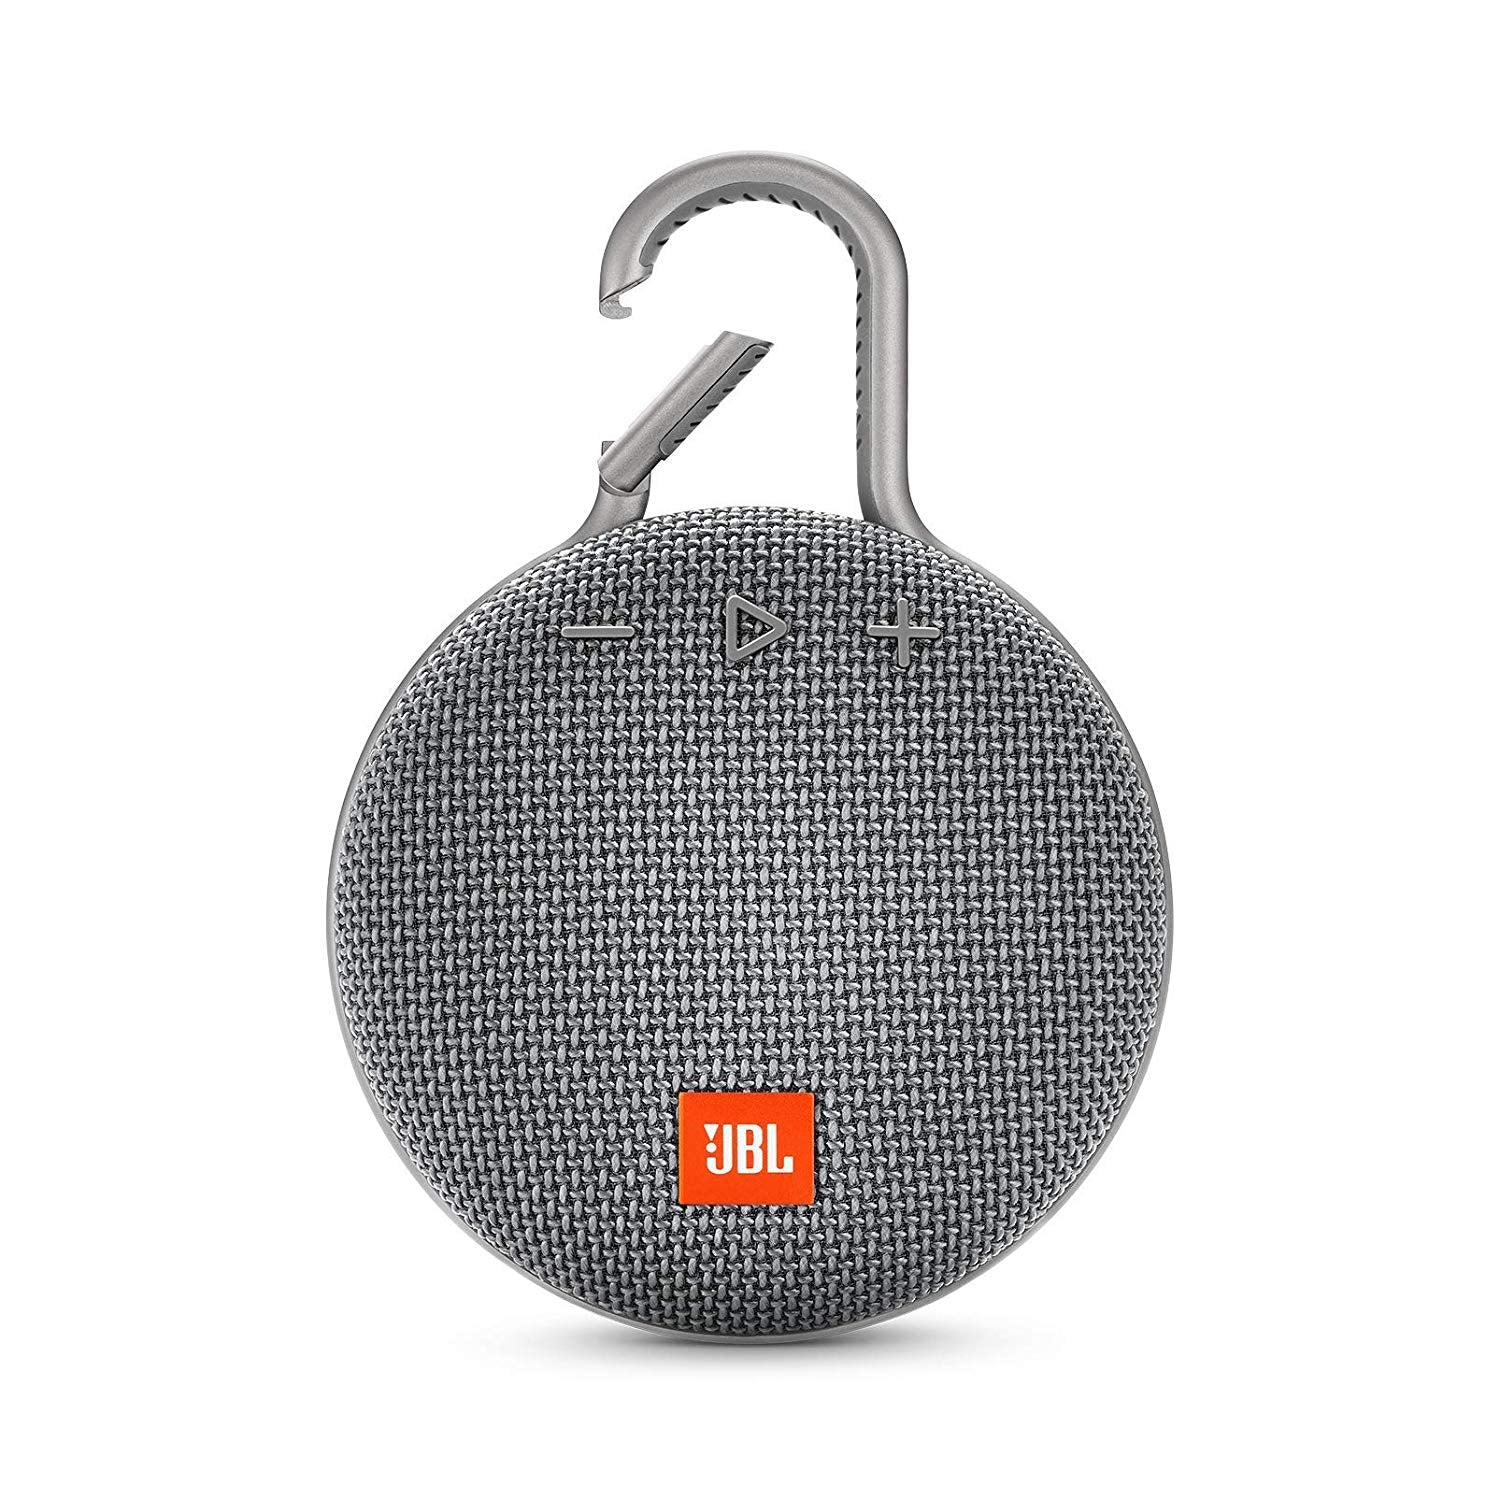 JBL Clip 3 Portable Waterproof Wireless Bluetooth Speaker, Gray - Certified Refurbished